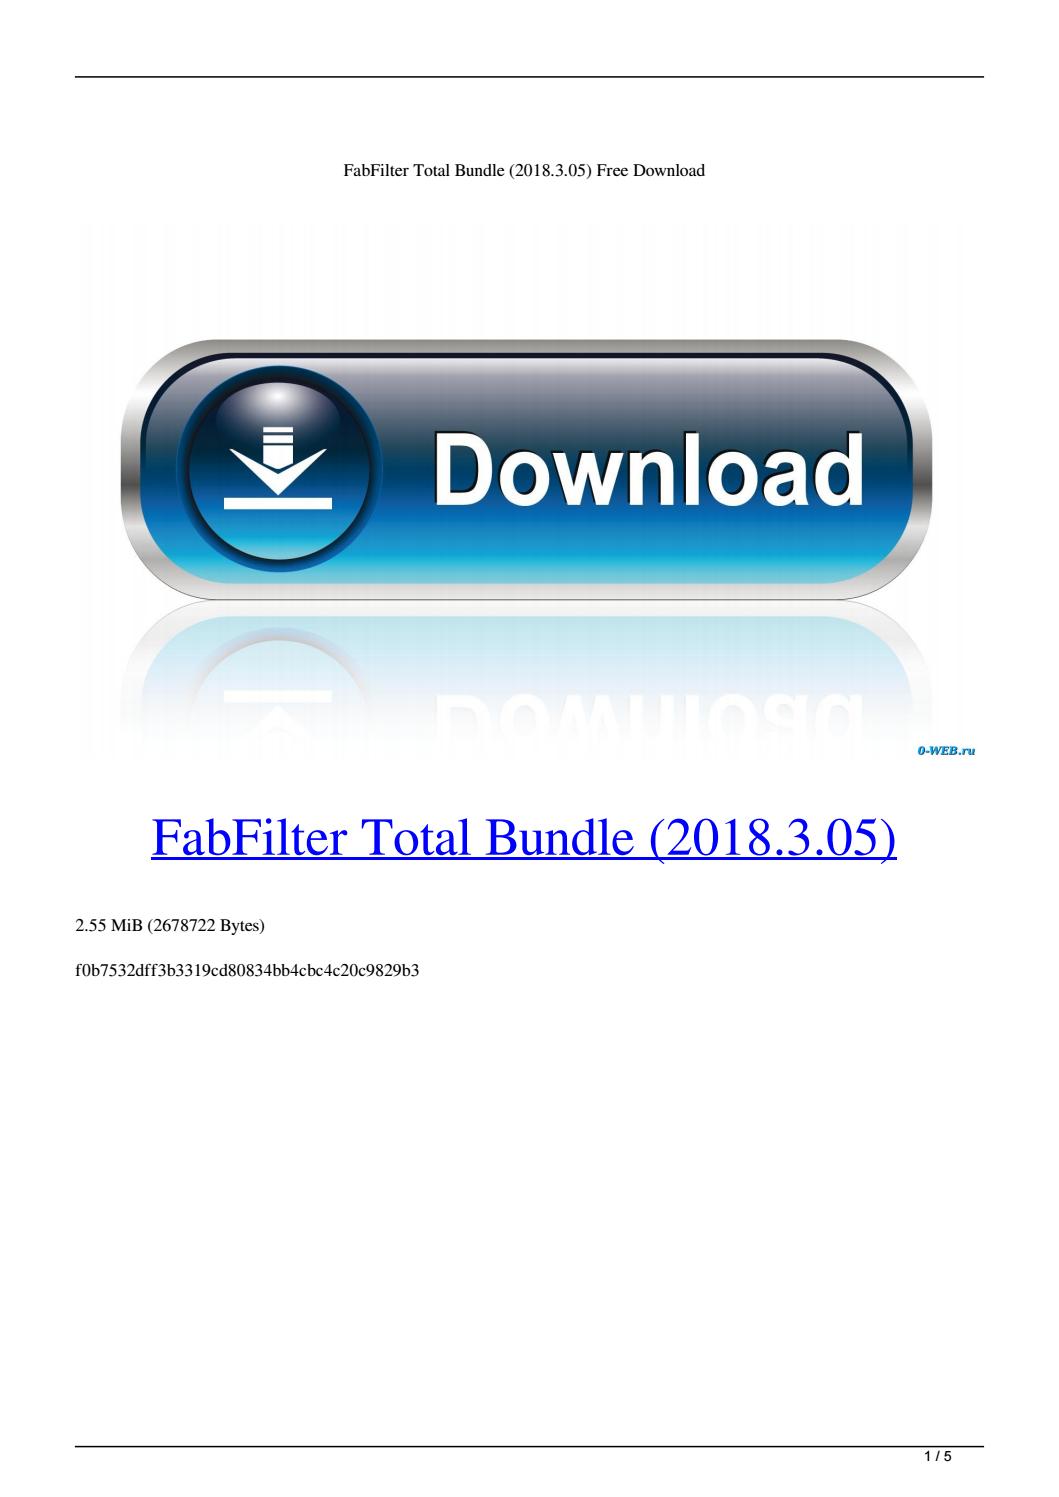 fabfilter total bundle crack free download